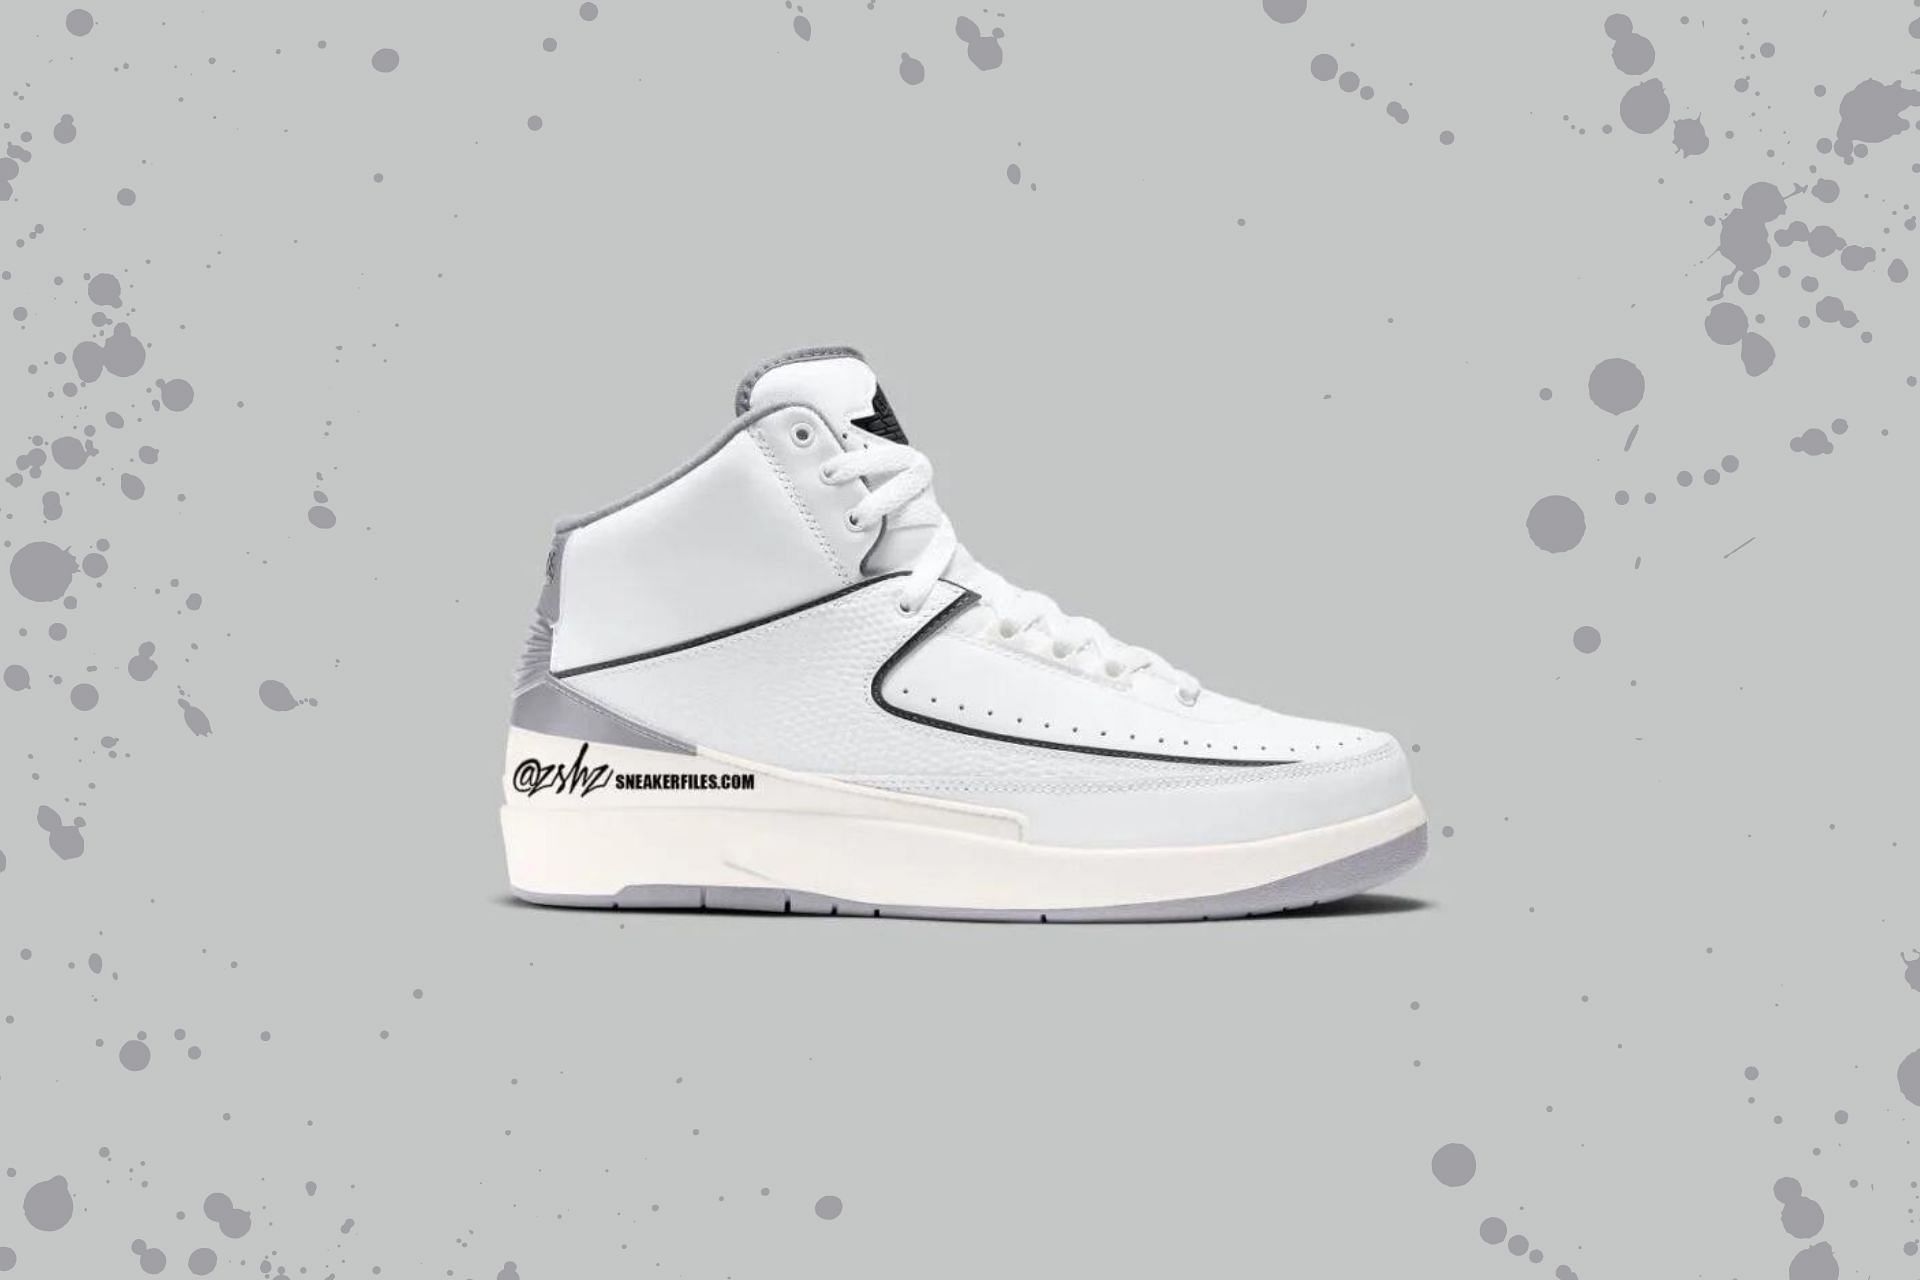 Air Jordan 2 Retro Neutral Grey shoes (Image via Instagram/@zsneakerheadz)